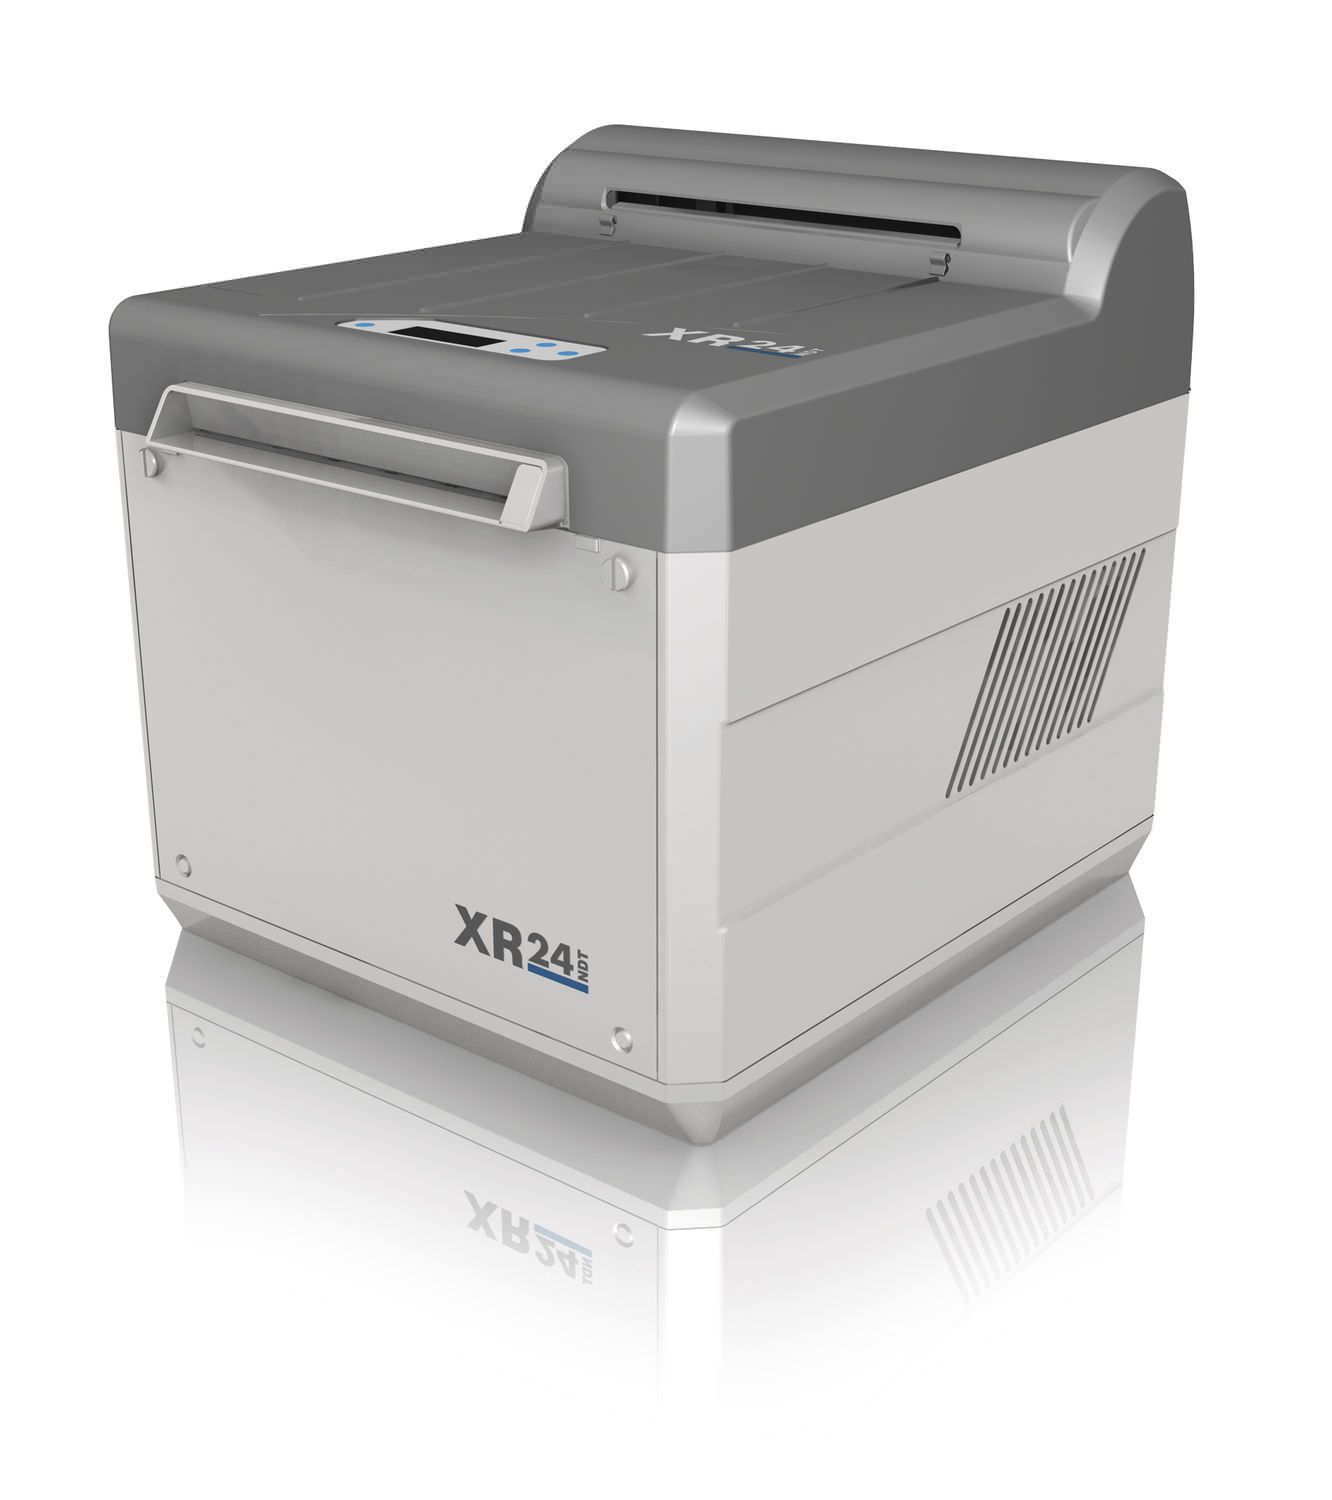 Standard radiography films X-ray film processor XR 24 NDT Dürr NDT